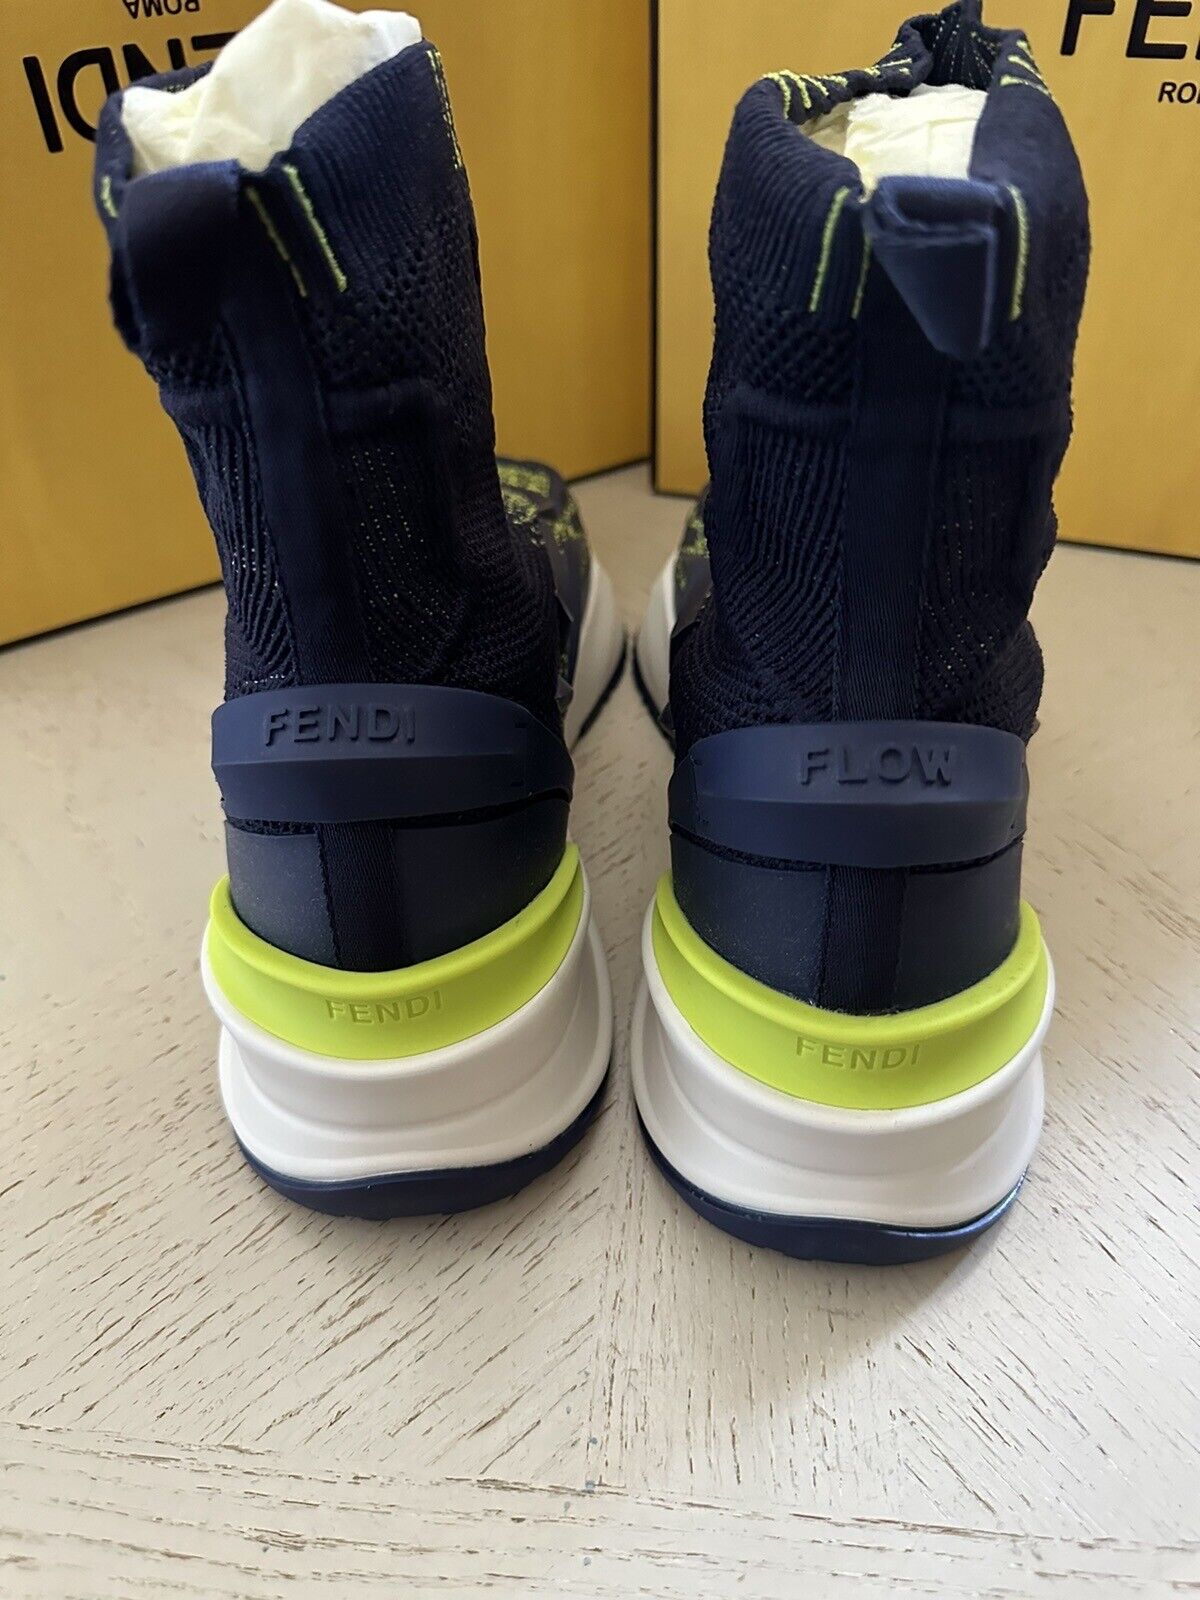 NIB $1190 Fendi Men Contrast Knit High Top Sneakers Shoes Navy/Green 11 US/10 UK